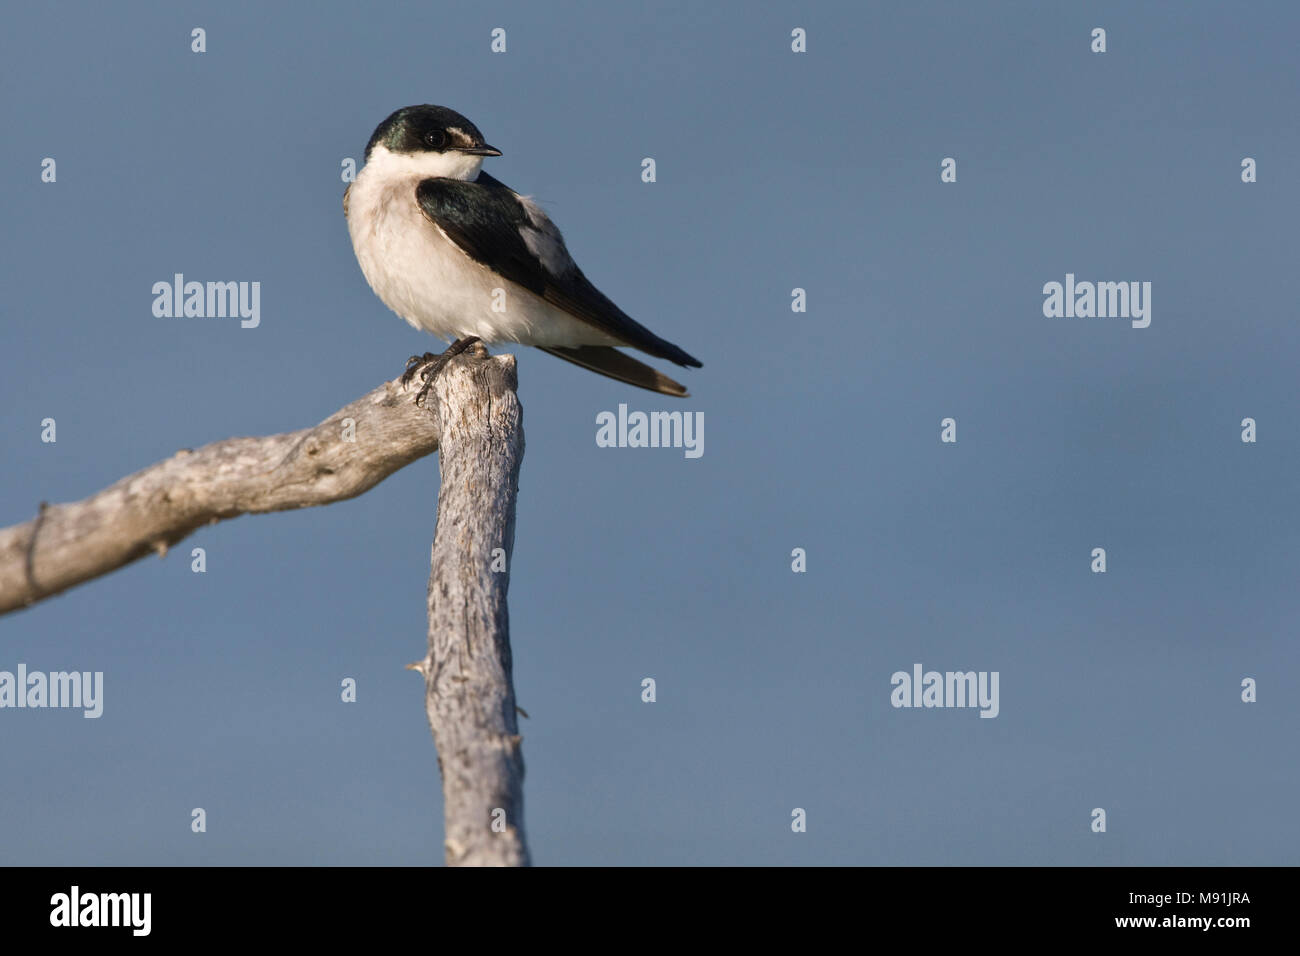 Mangrovezwaluw zittend op een tak, Mangrove Swallow perched on a branch Stock Photo